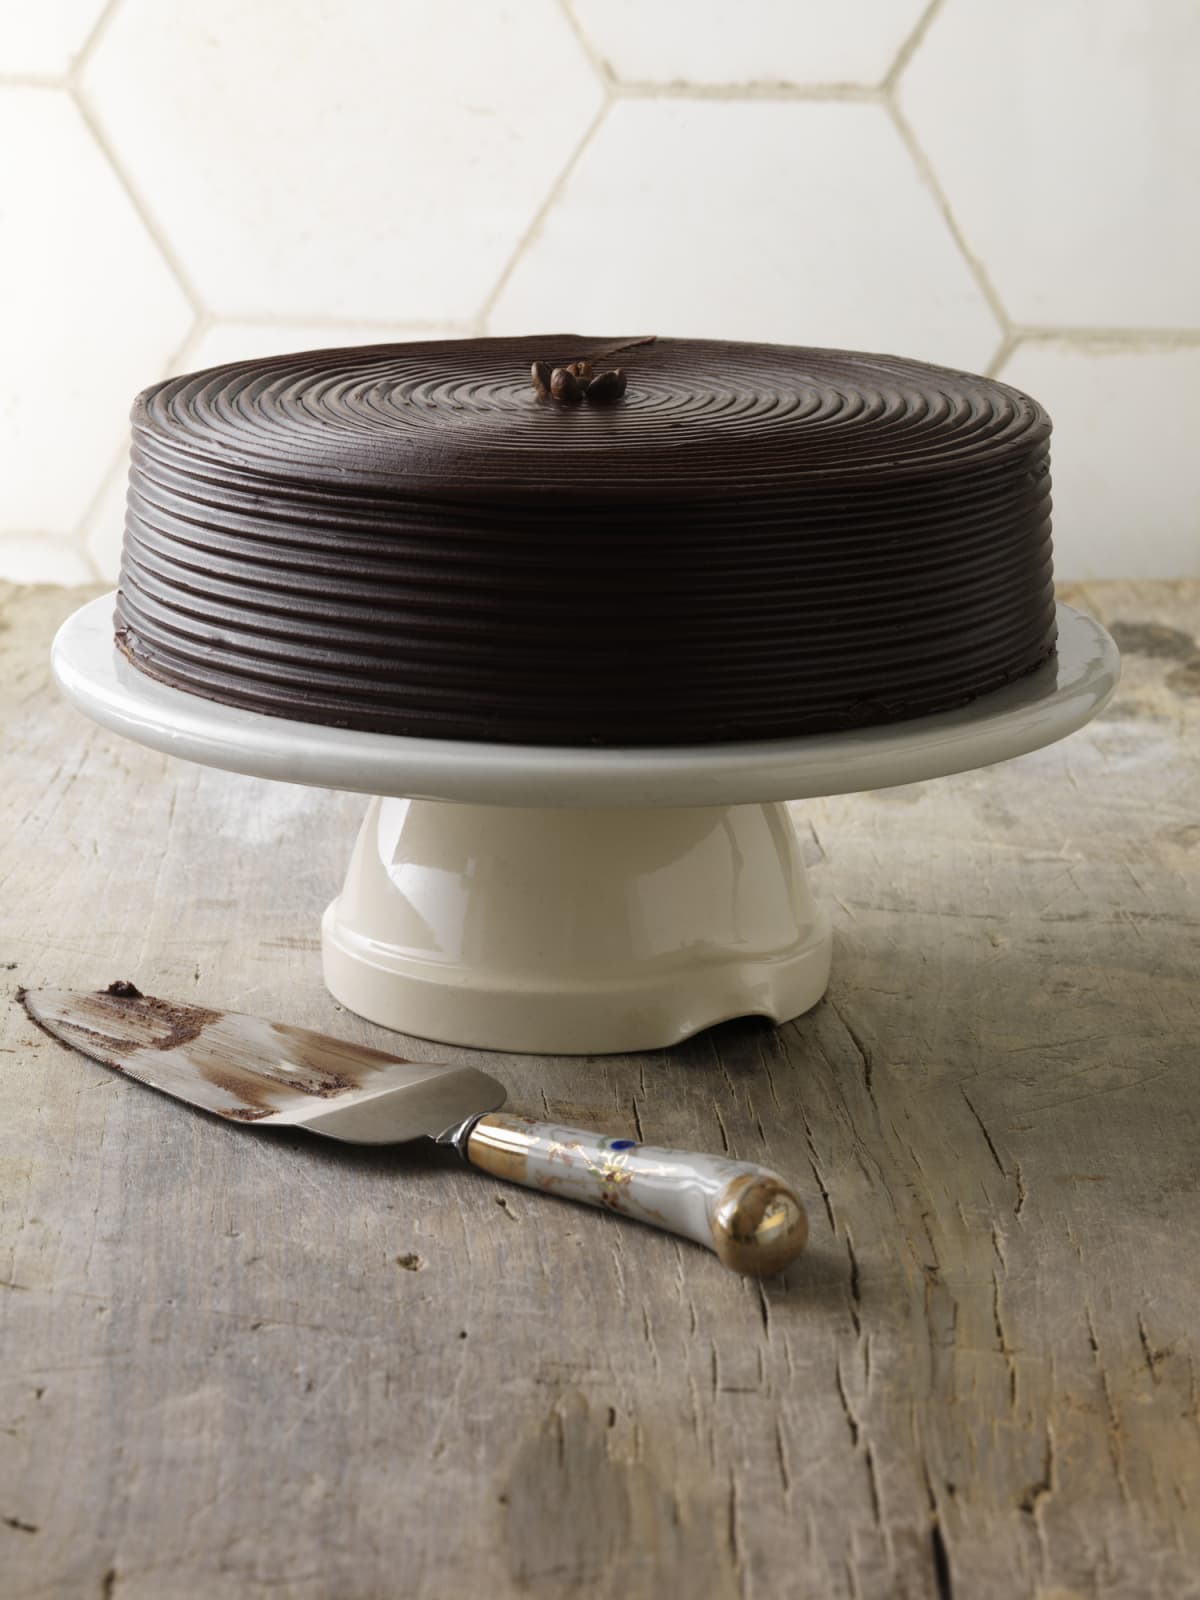 Chocolate cake on cake stand